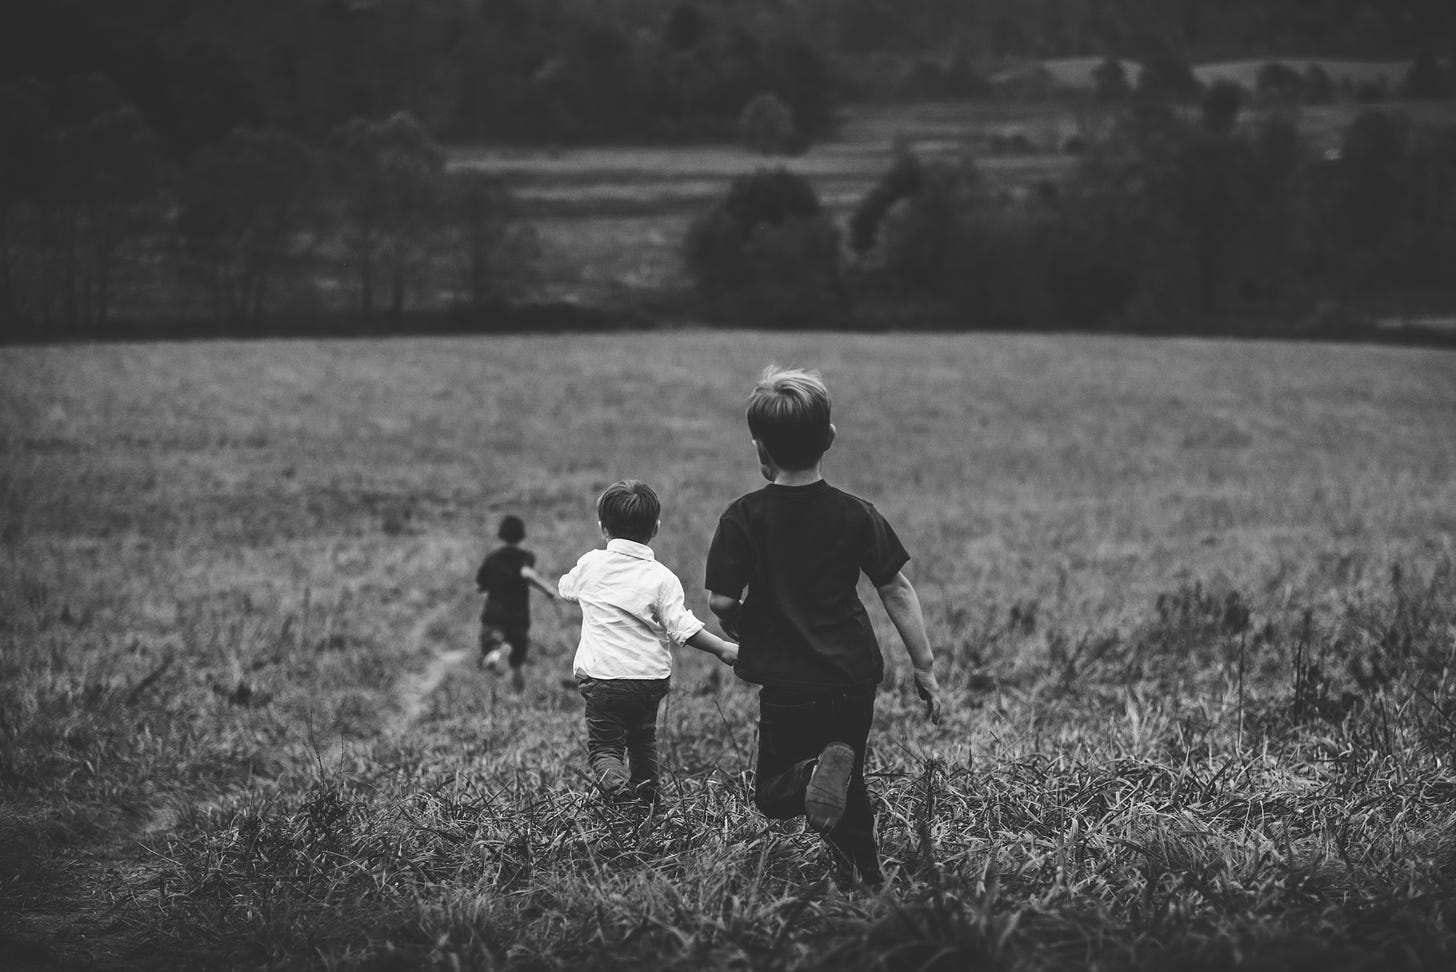 Three children run through a field, backs to the camera.